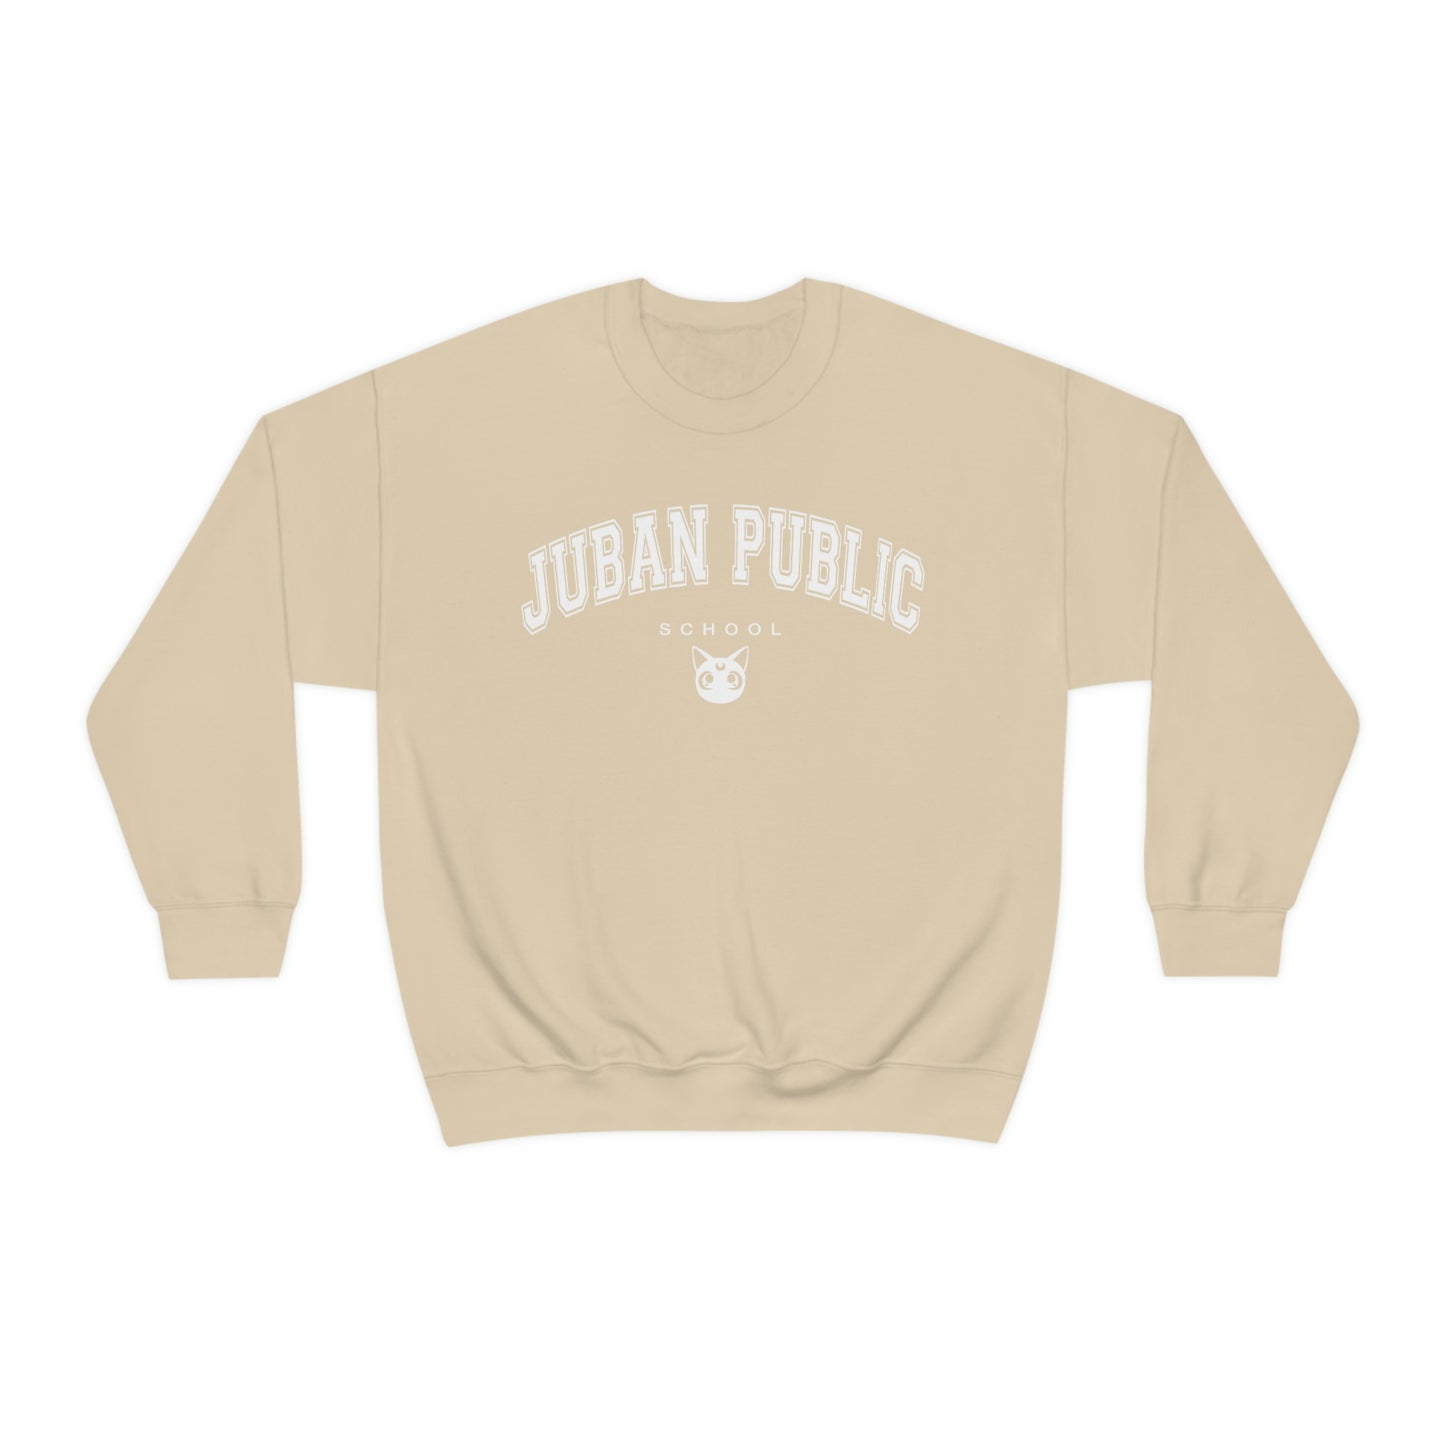 Juban school sweatshirt crew neck